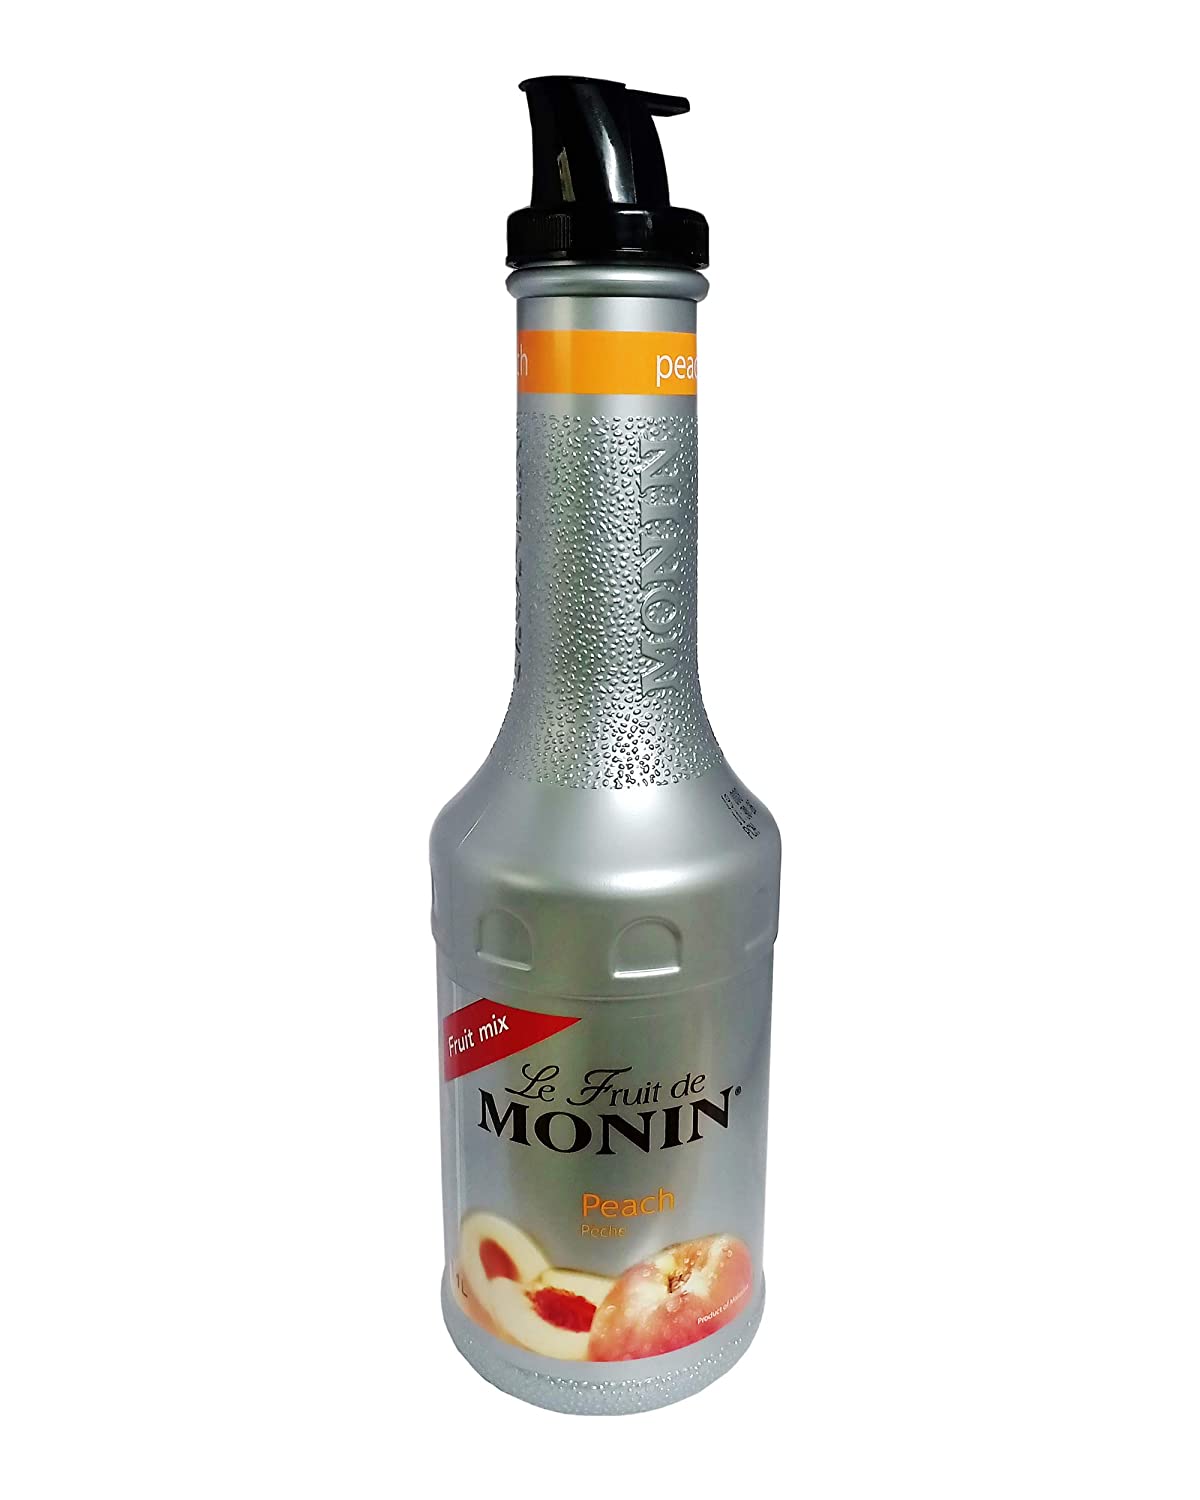 Monin Puree Peach Syrup Image